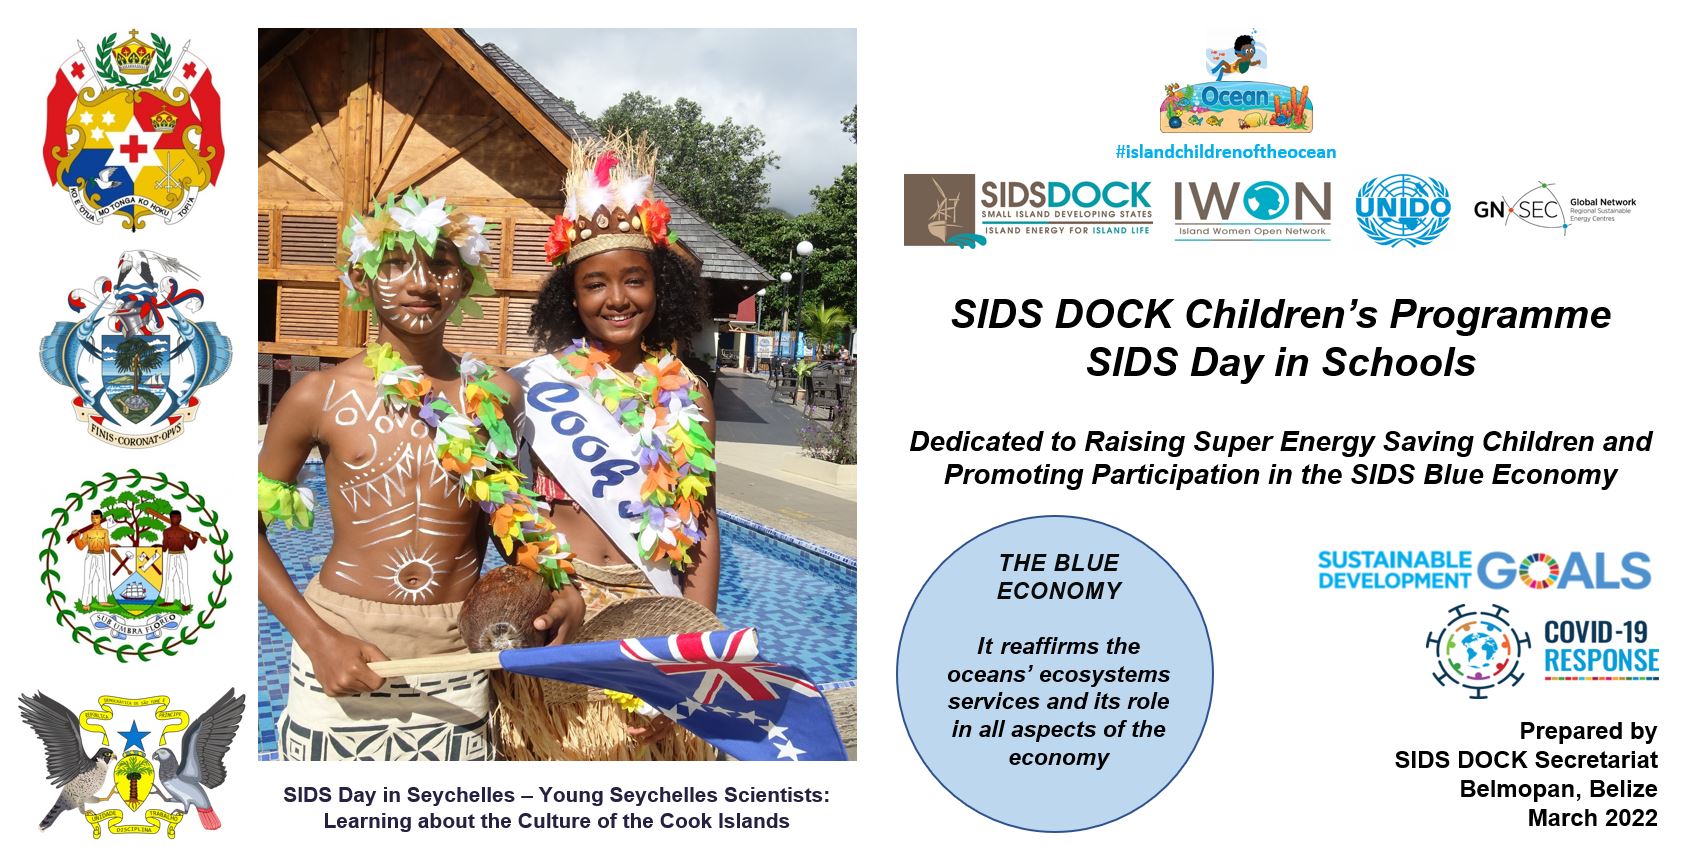 SIDS DOCK Children’s Programme: SIDS Day in Schools